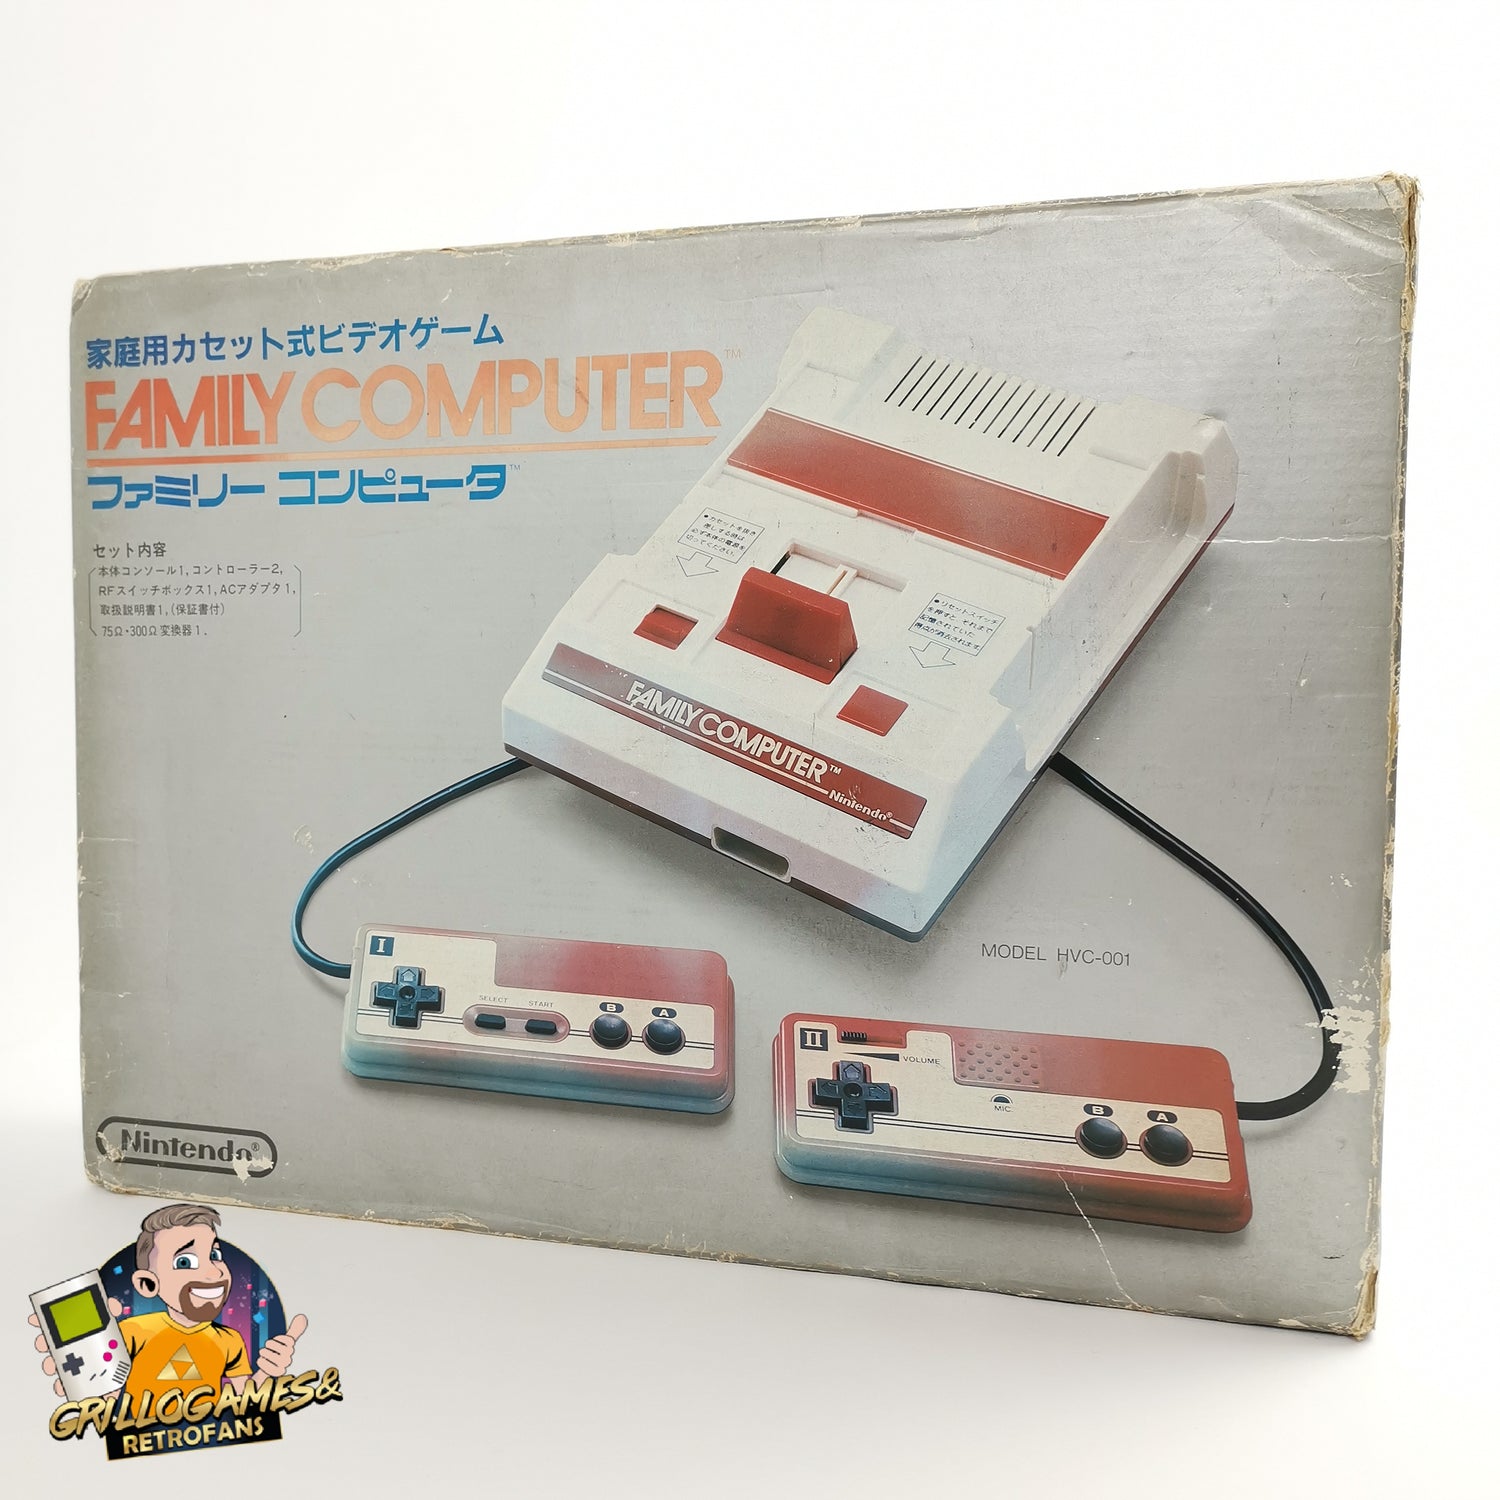 Japanese NES console: Nintendo - Family Computer | Original packaging JAPAN